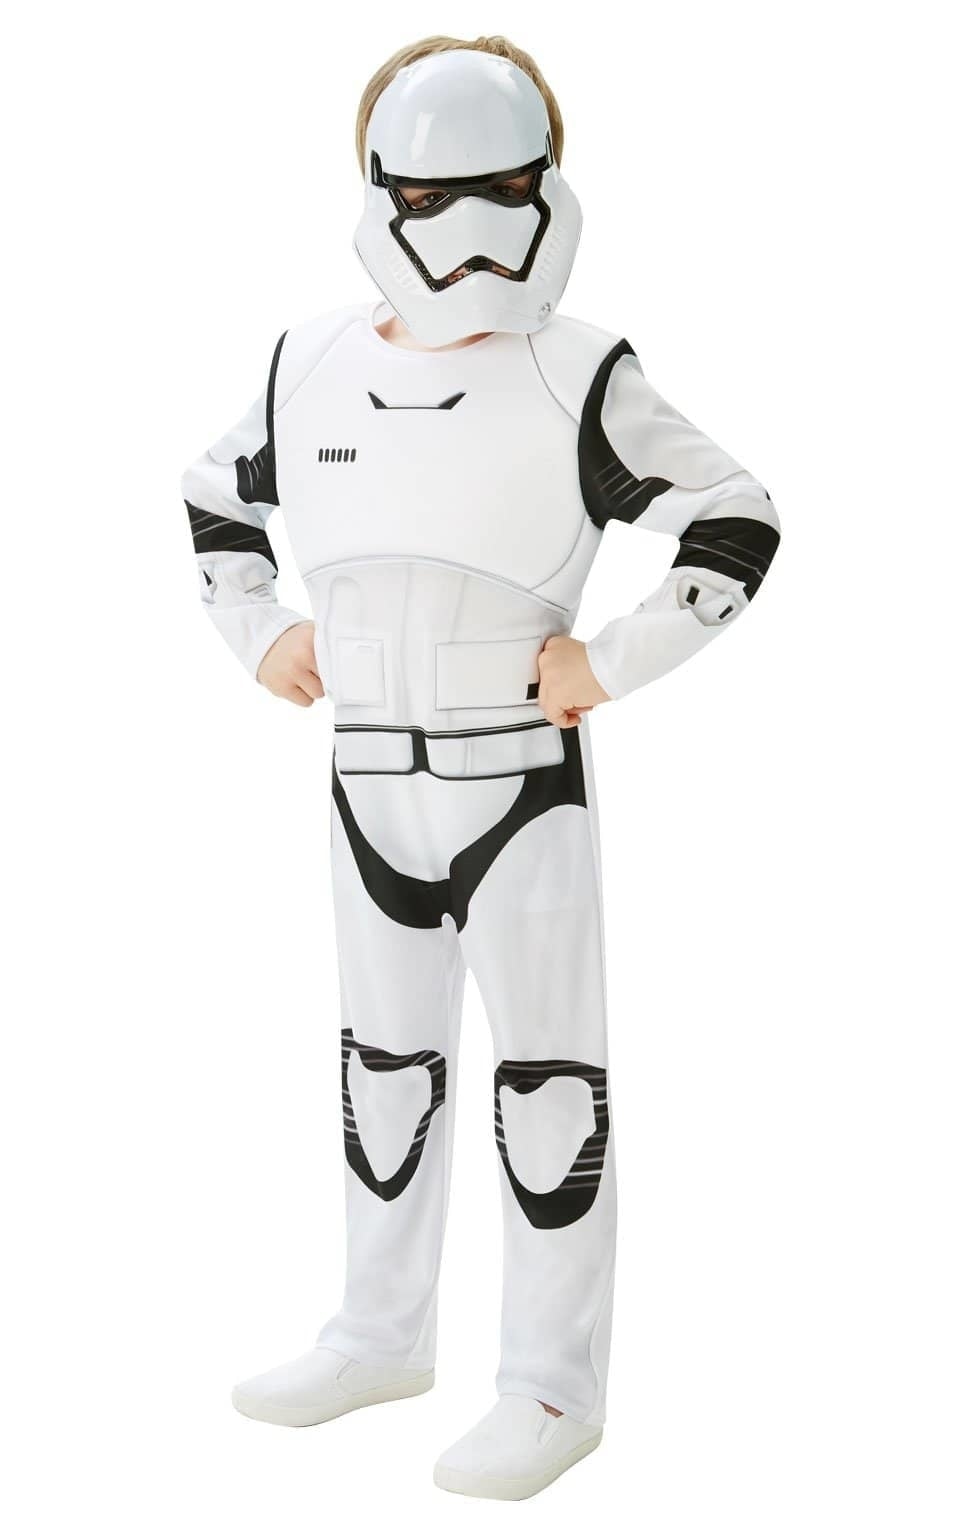 Star Wars Stormtrooper Costume For Kids The Force Awakens_1 rub-6202691112